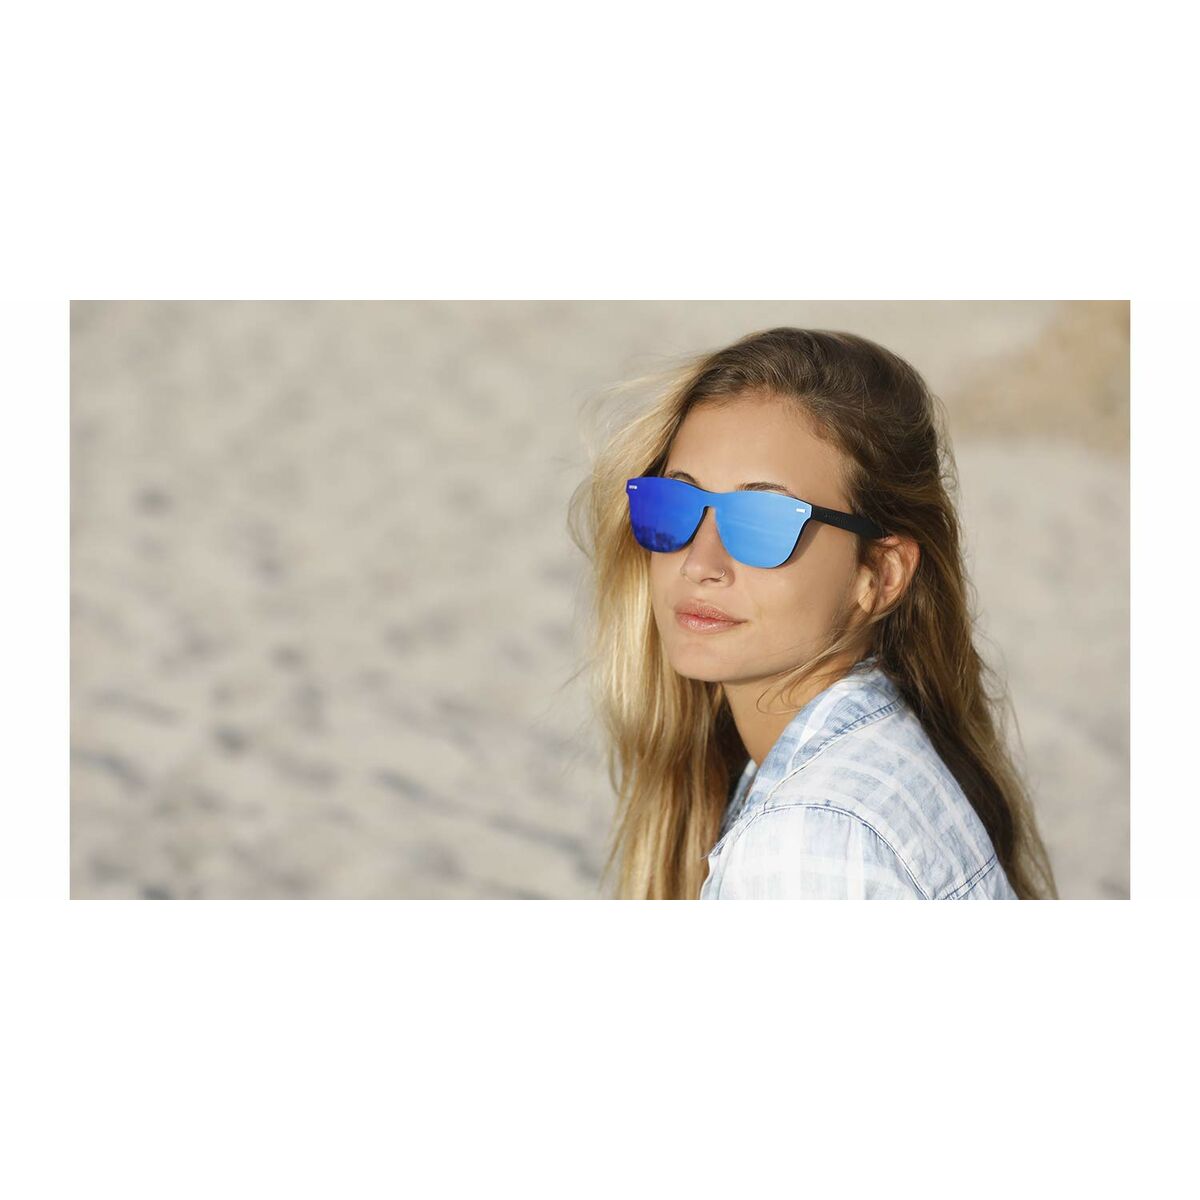 Unisex Sunglasses Northweek Regular Phantom Ø 47 mm Blue Black